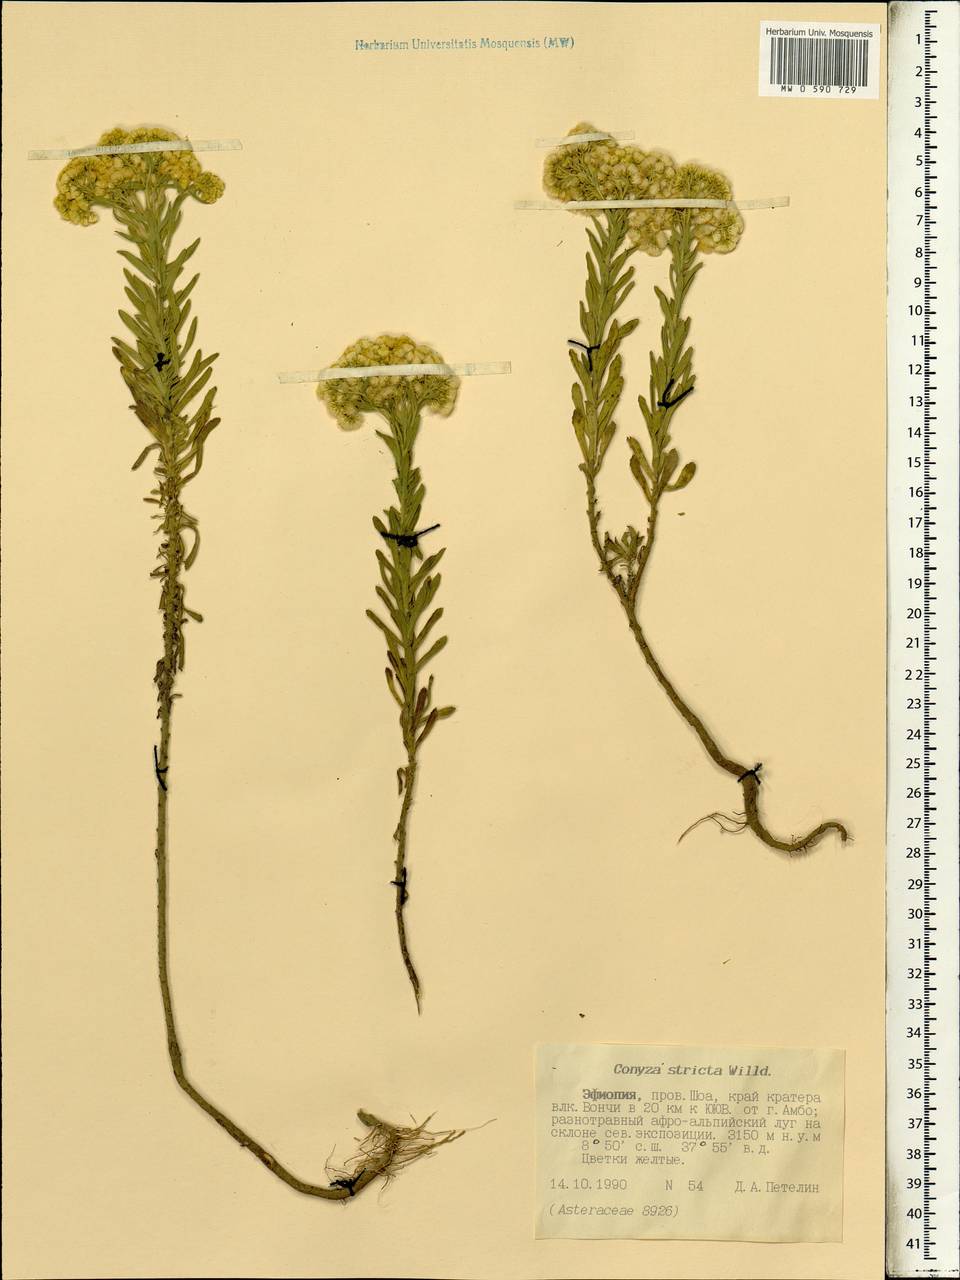 Conyza stricta Willd., Африка (AFR) (Эфиопия)